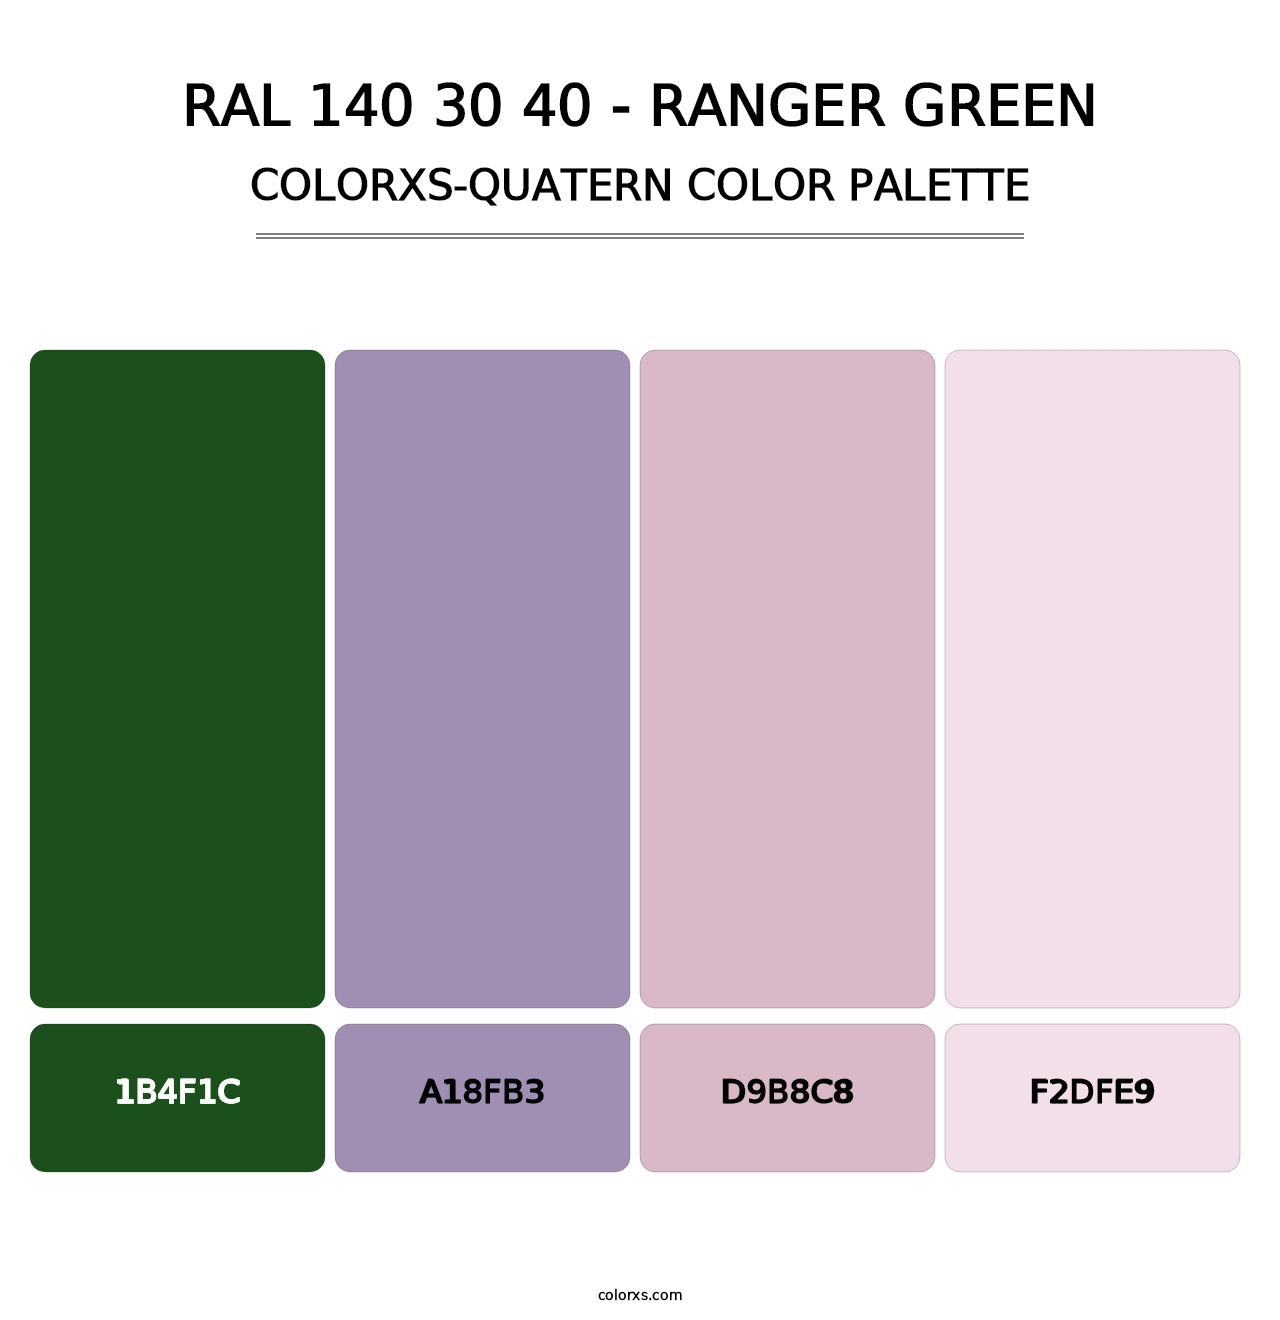 RAL 140 30 40 - Ranger Green - Colorxs Quatern Palette